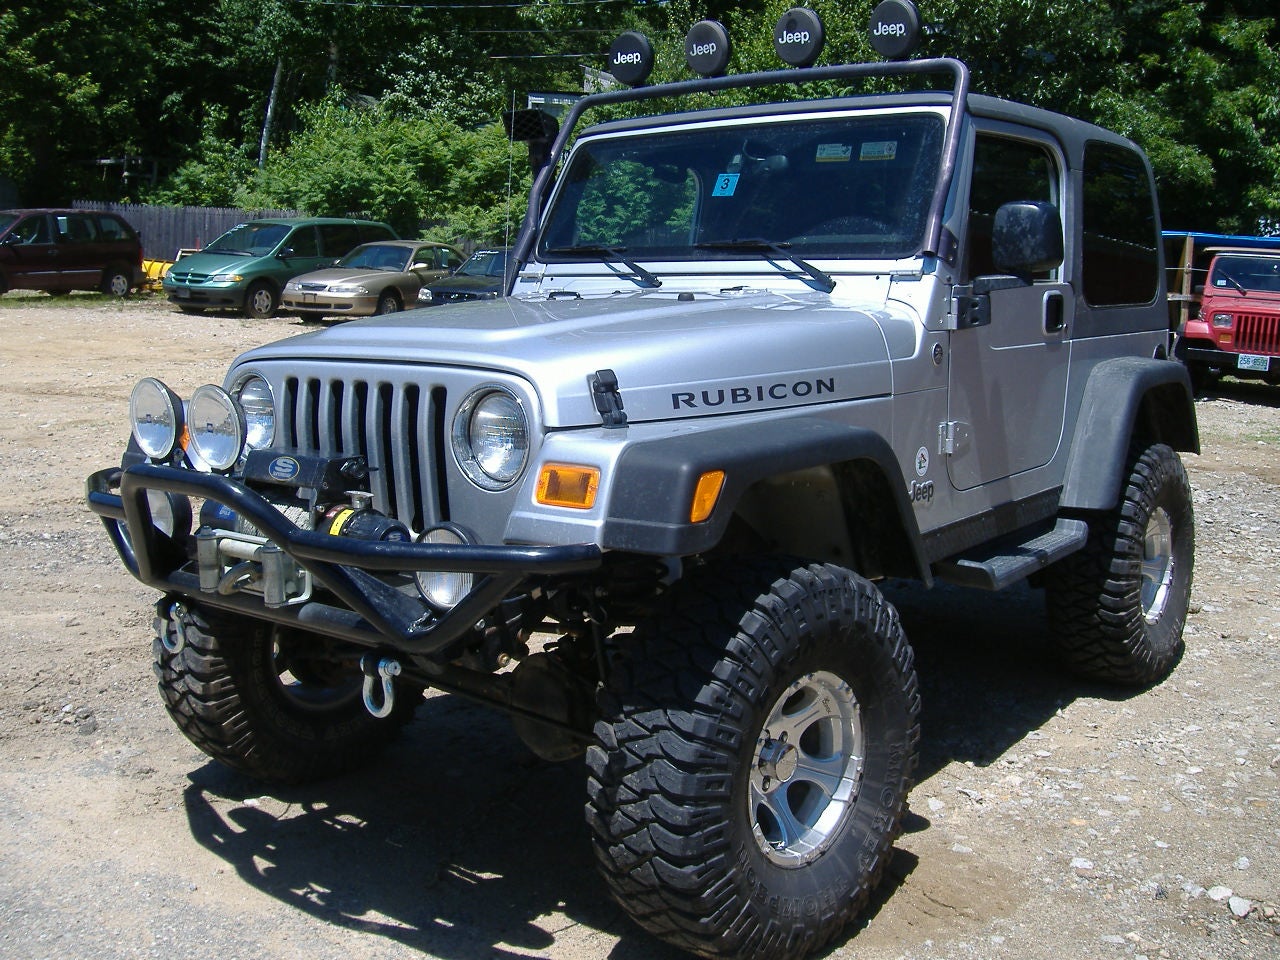 2006 Jeep Wrangler Rubicon picture, exterior